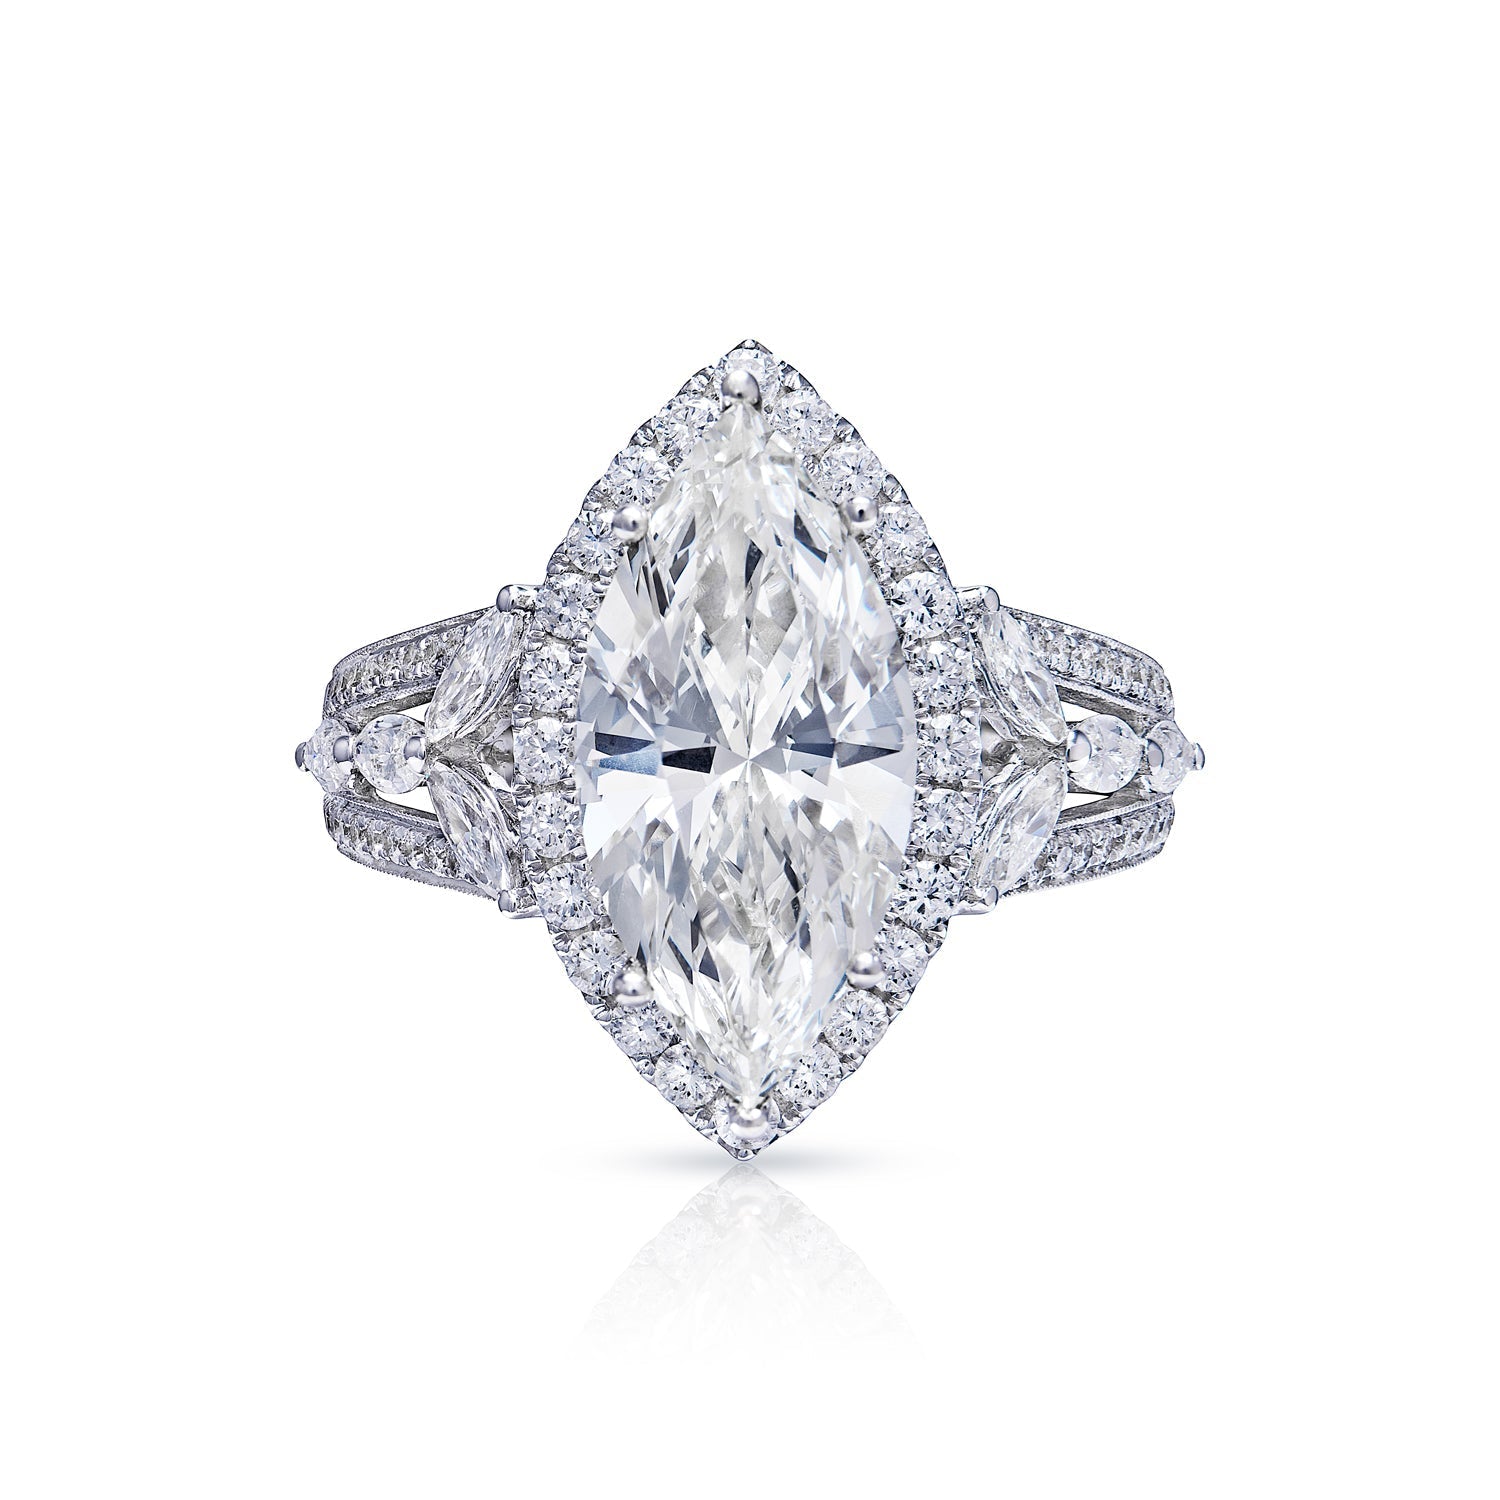 Katie 5 Carat J IF Marquise Cut Diamond Engagement Ring in 18 Karat White Gold Front View